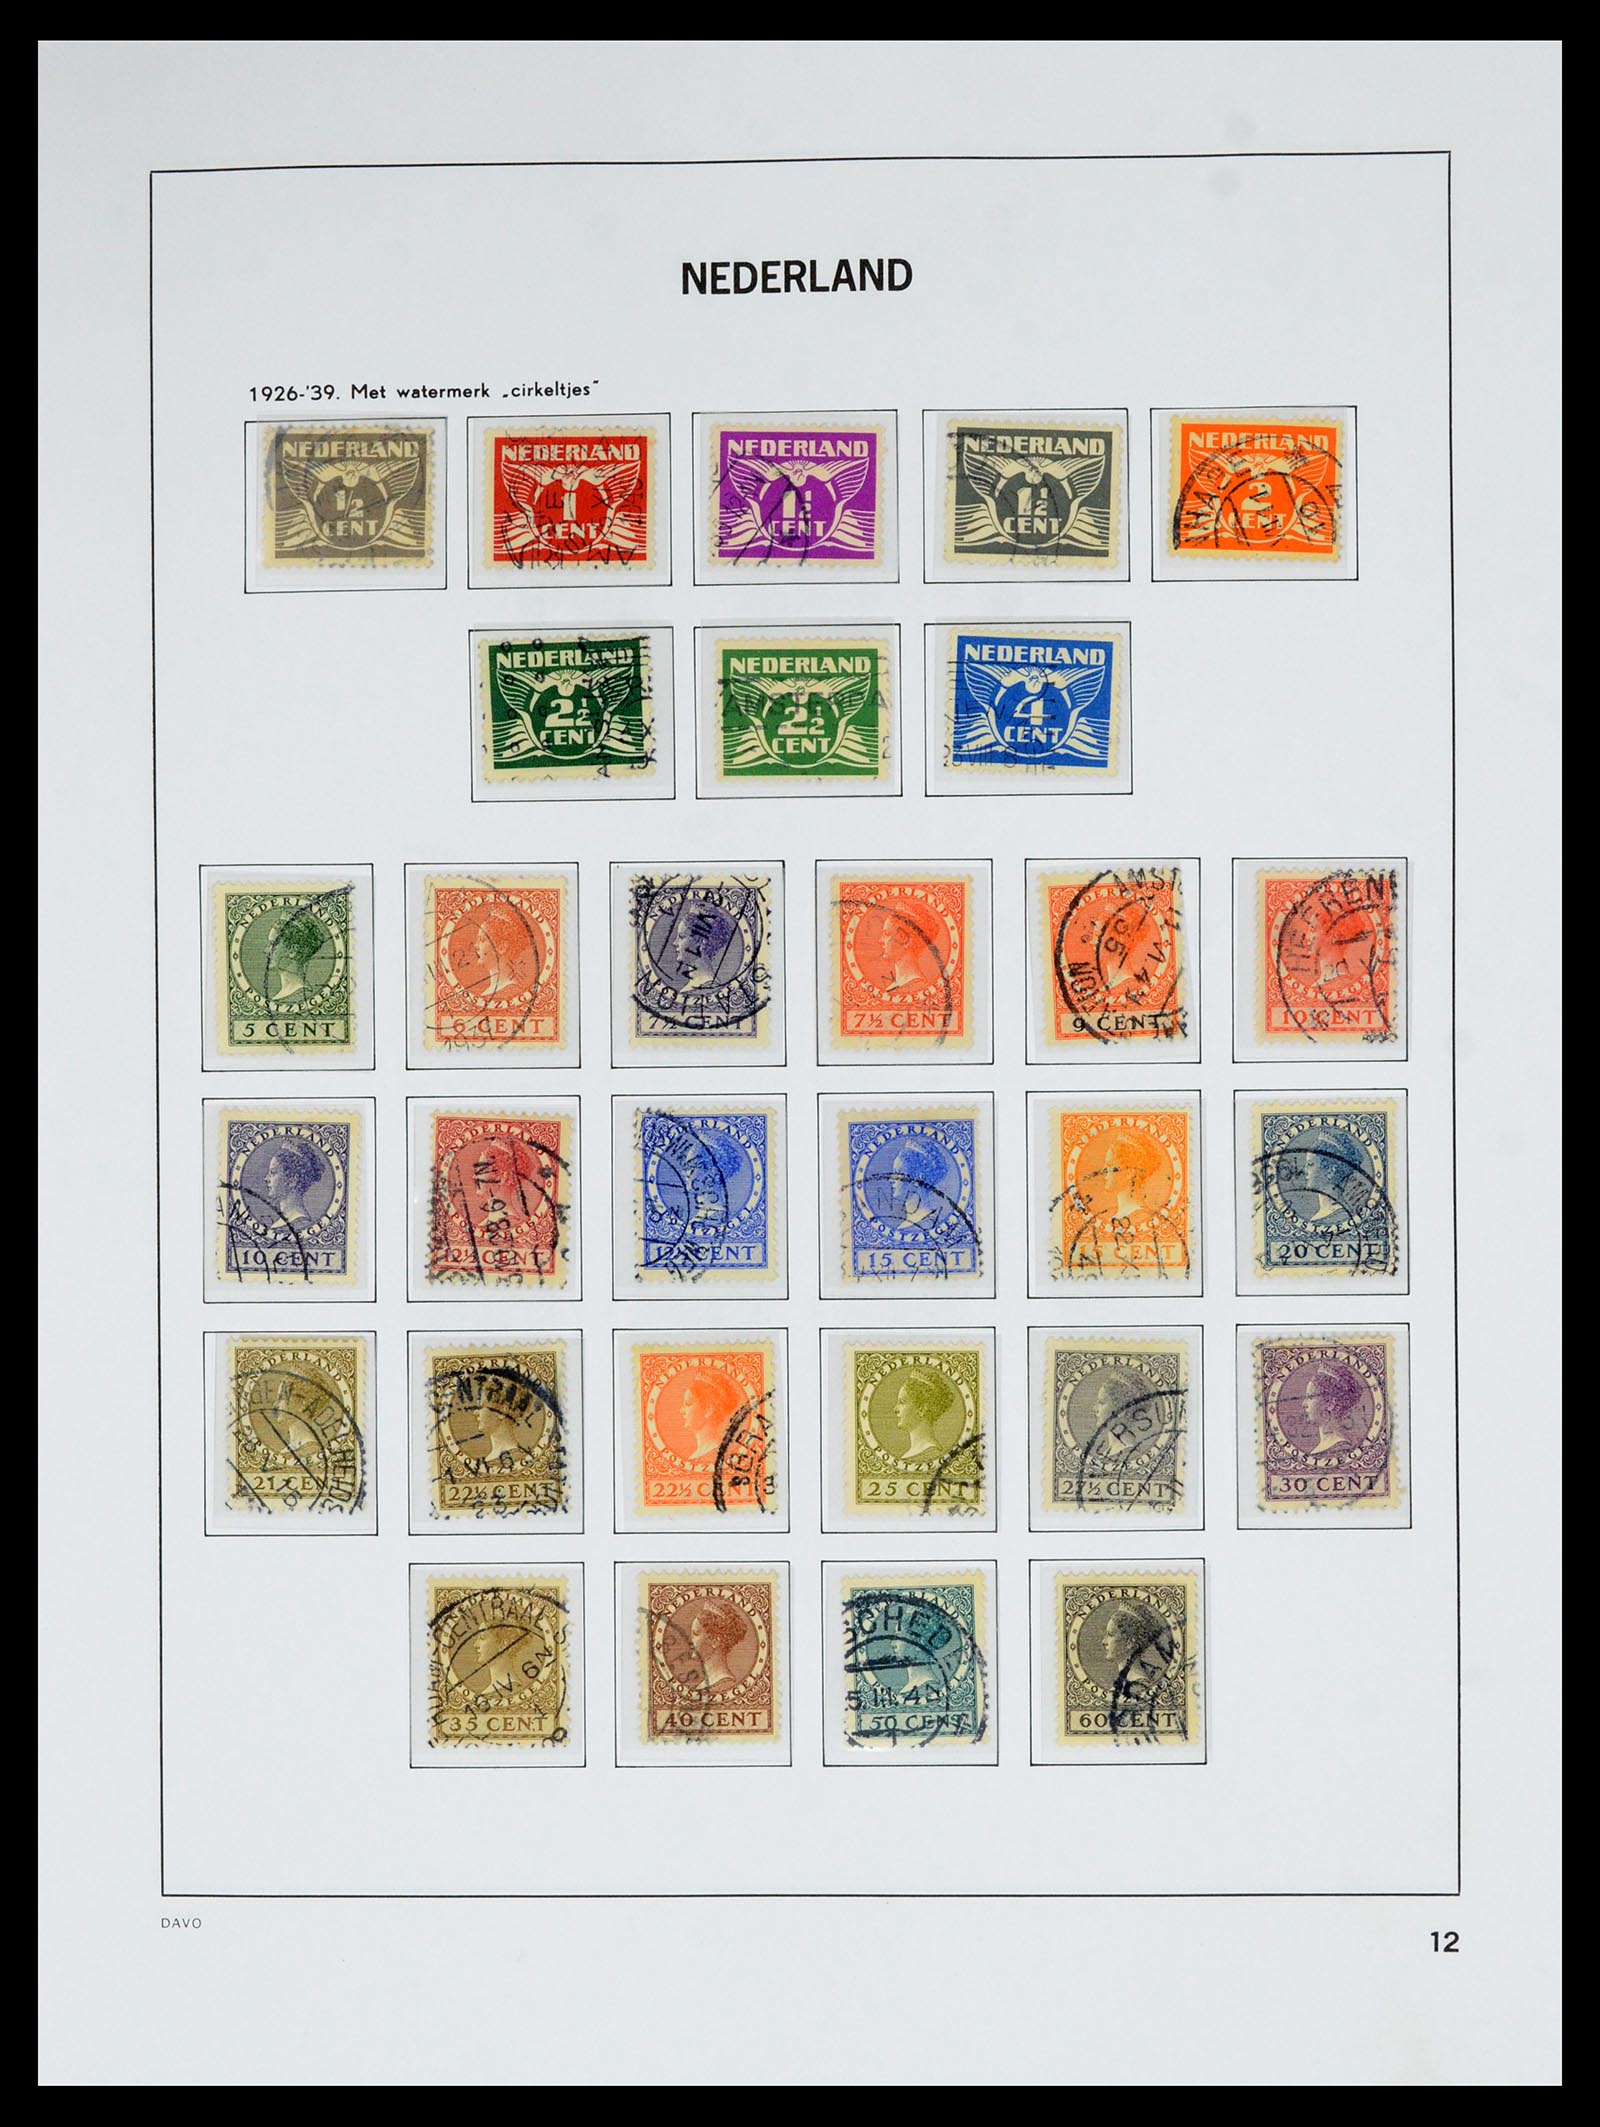 36629 012 - Stamp collection 36629 Nederland 1852-1989.